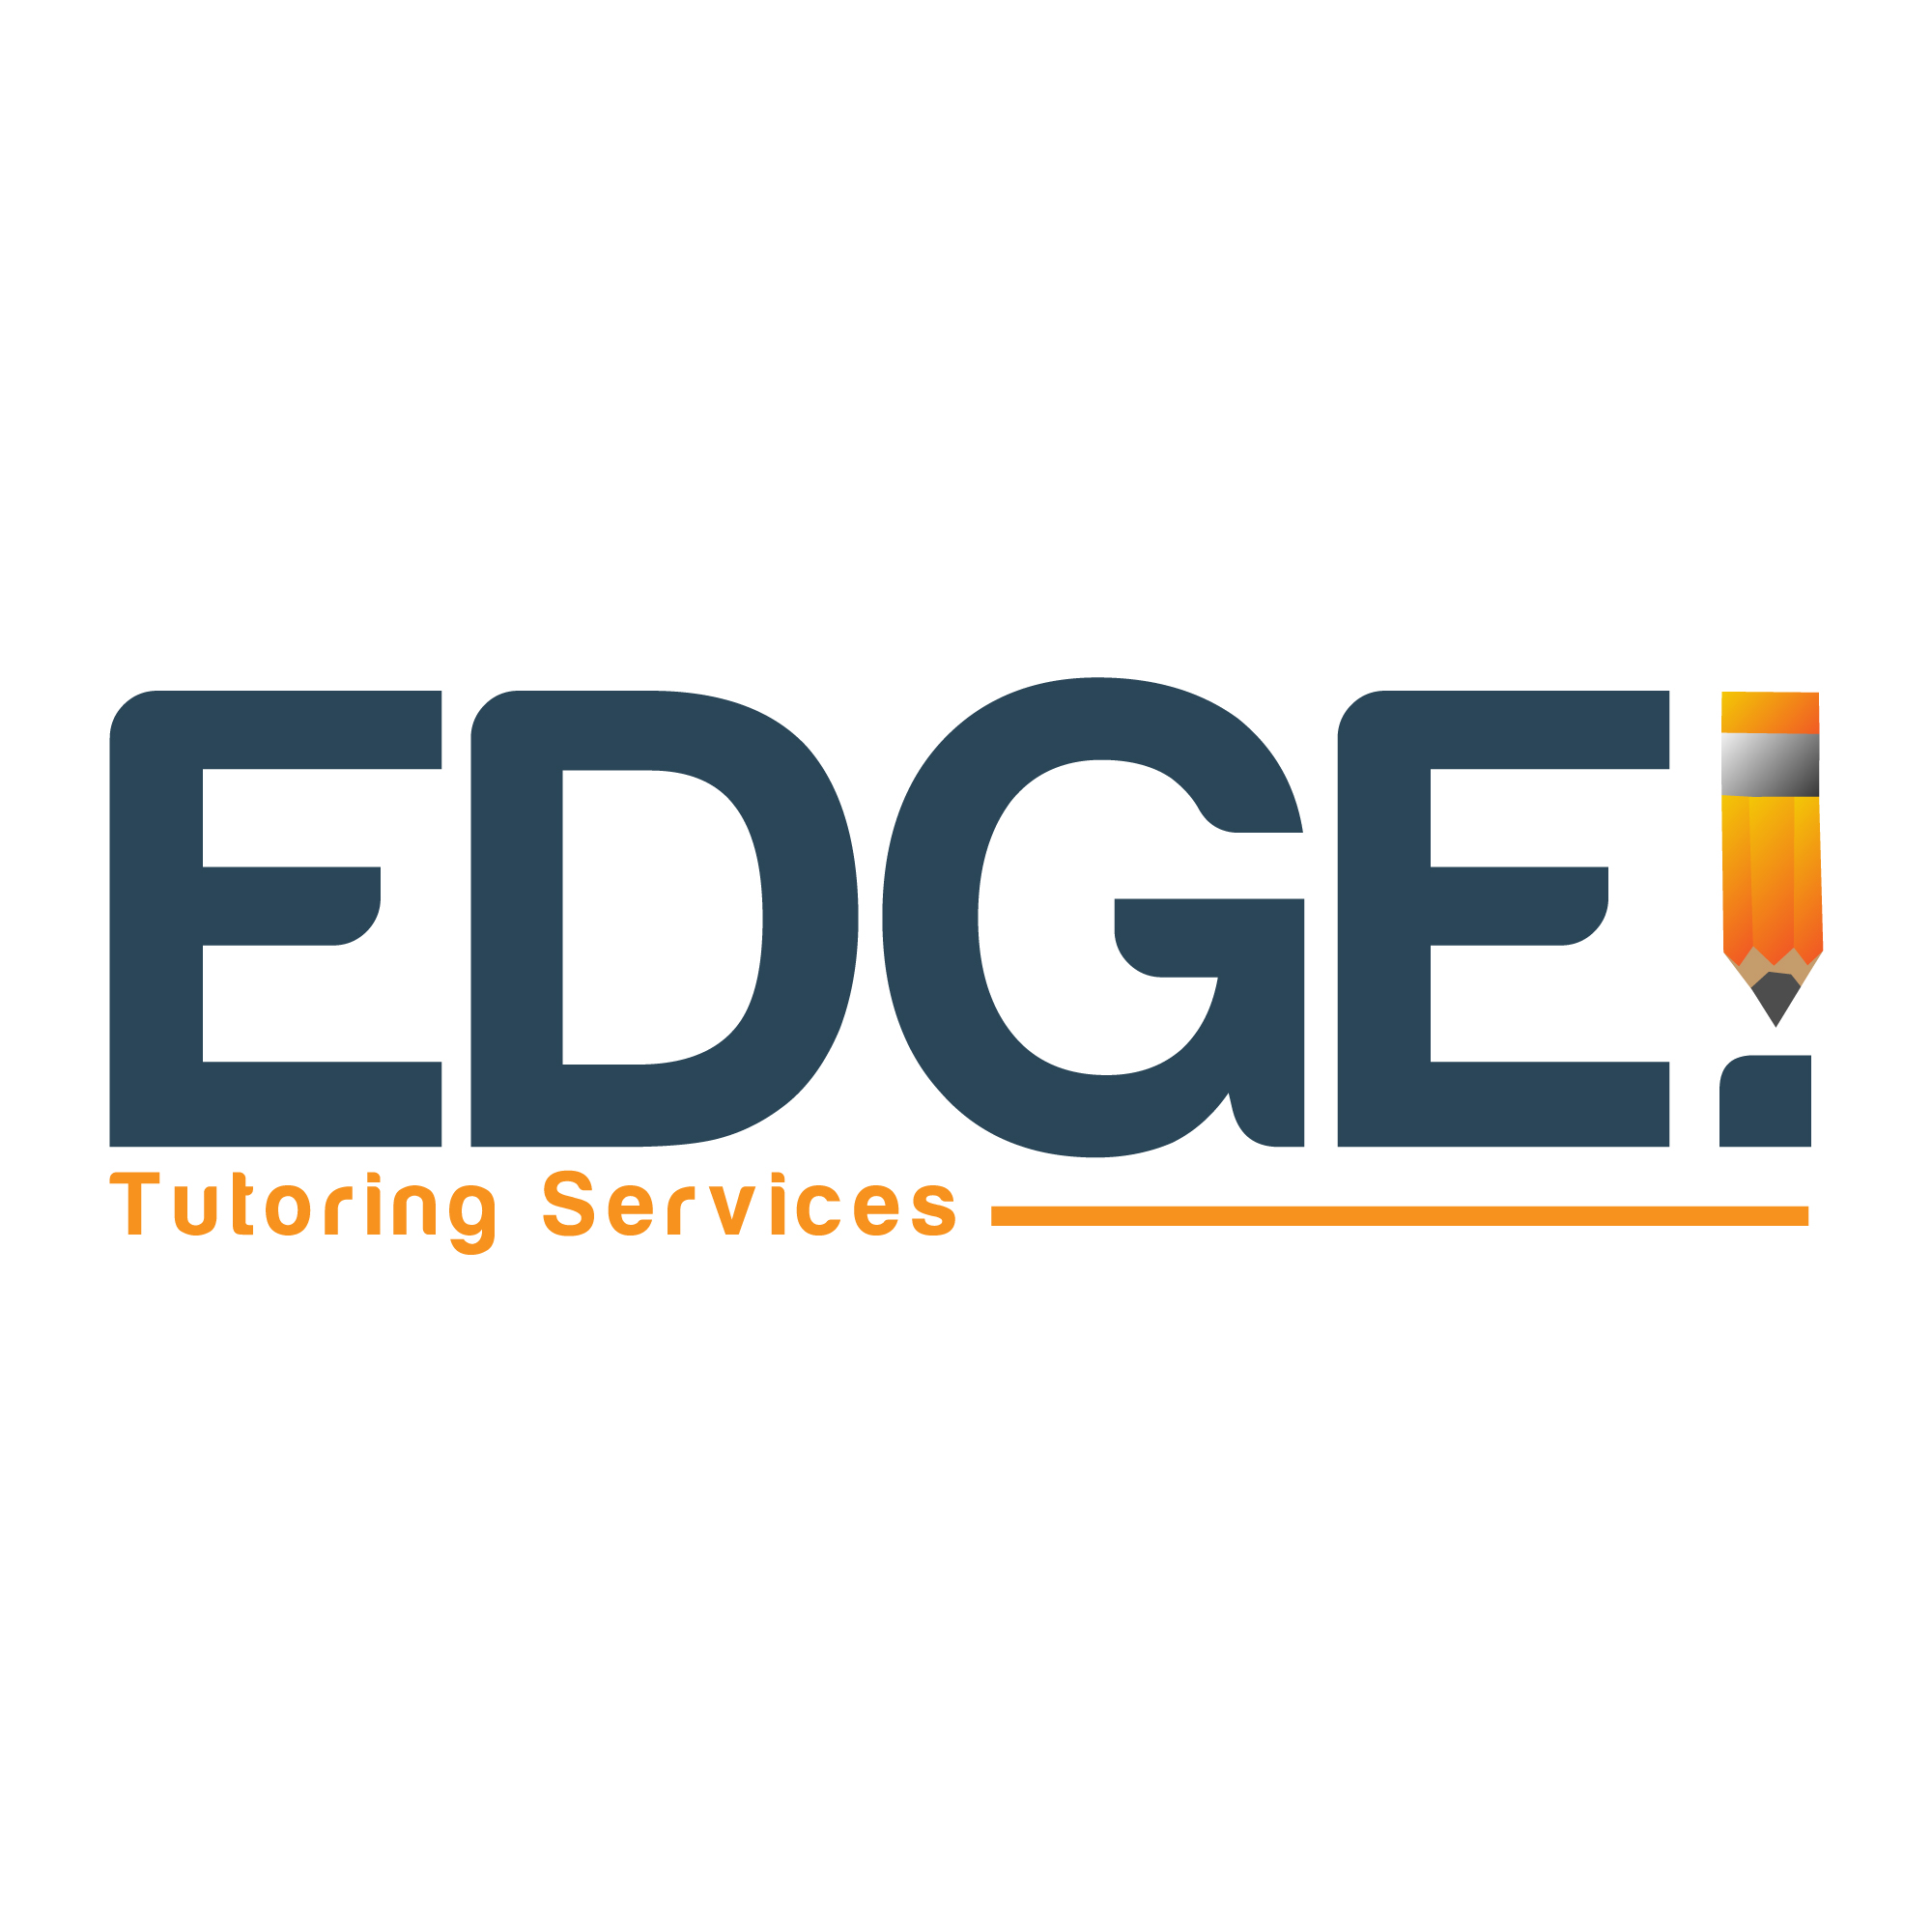 EDGE! Adult Education and GED Program logo